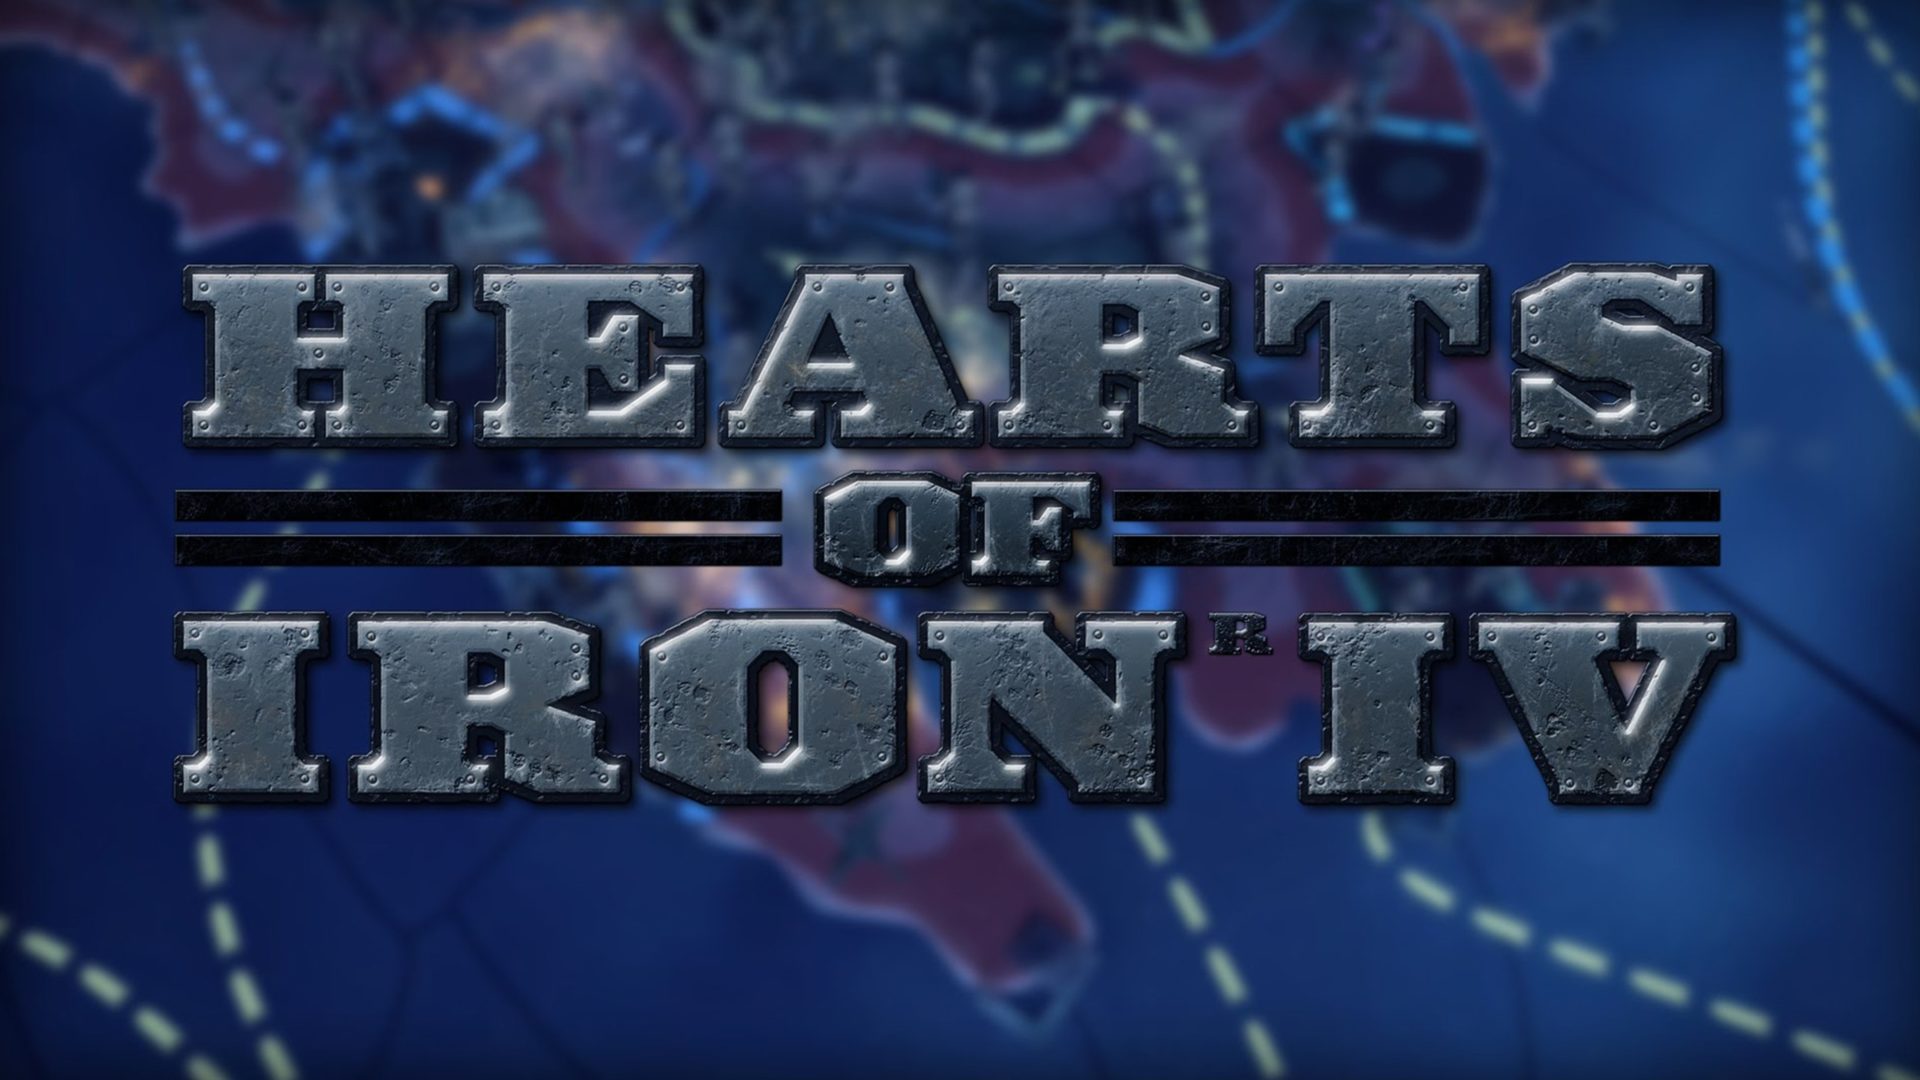 hearts of iron iv logo